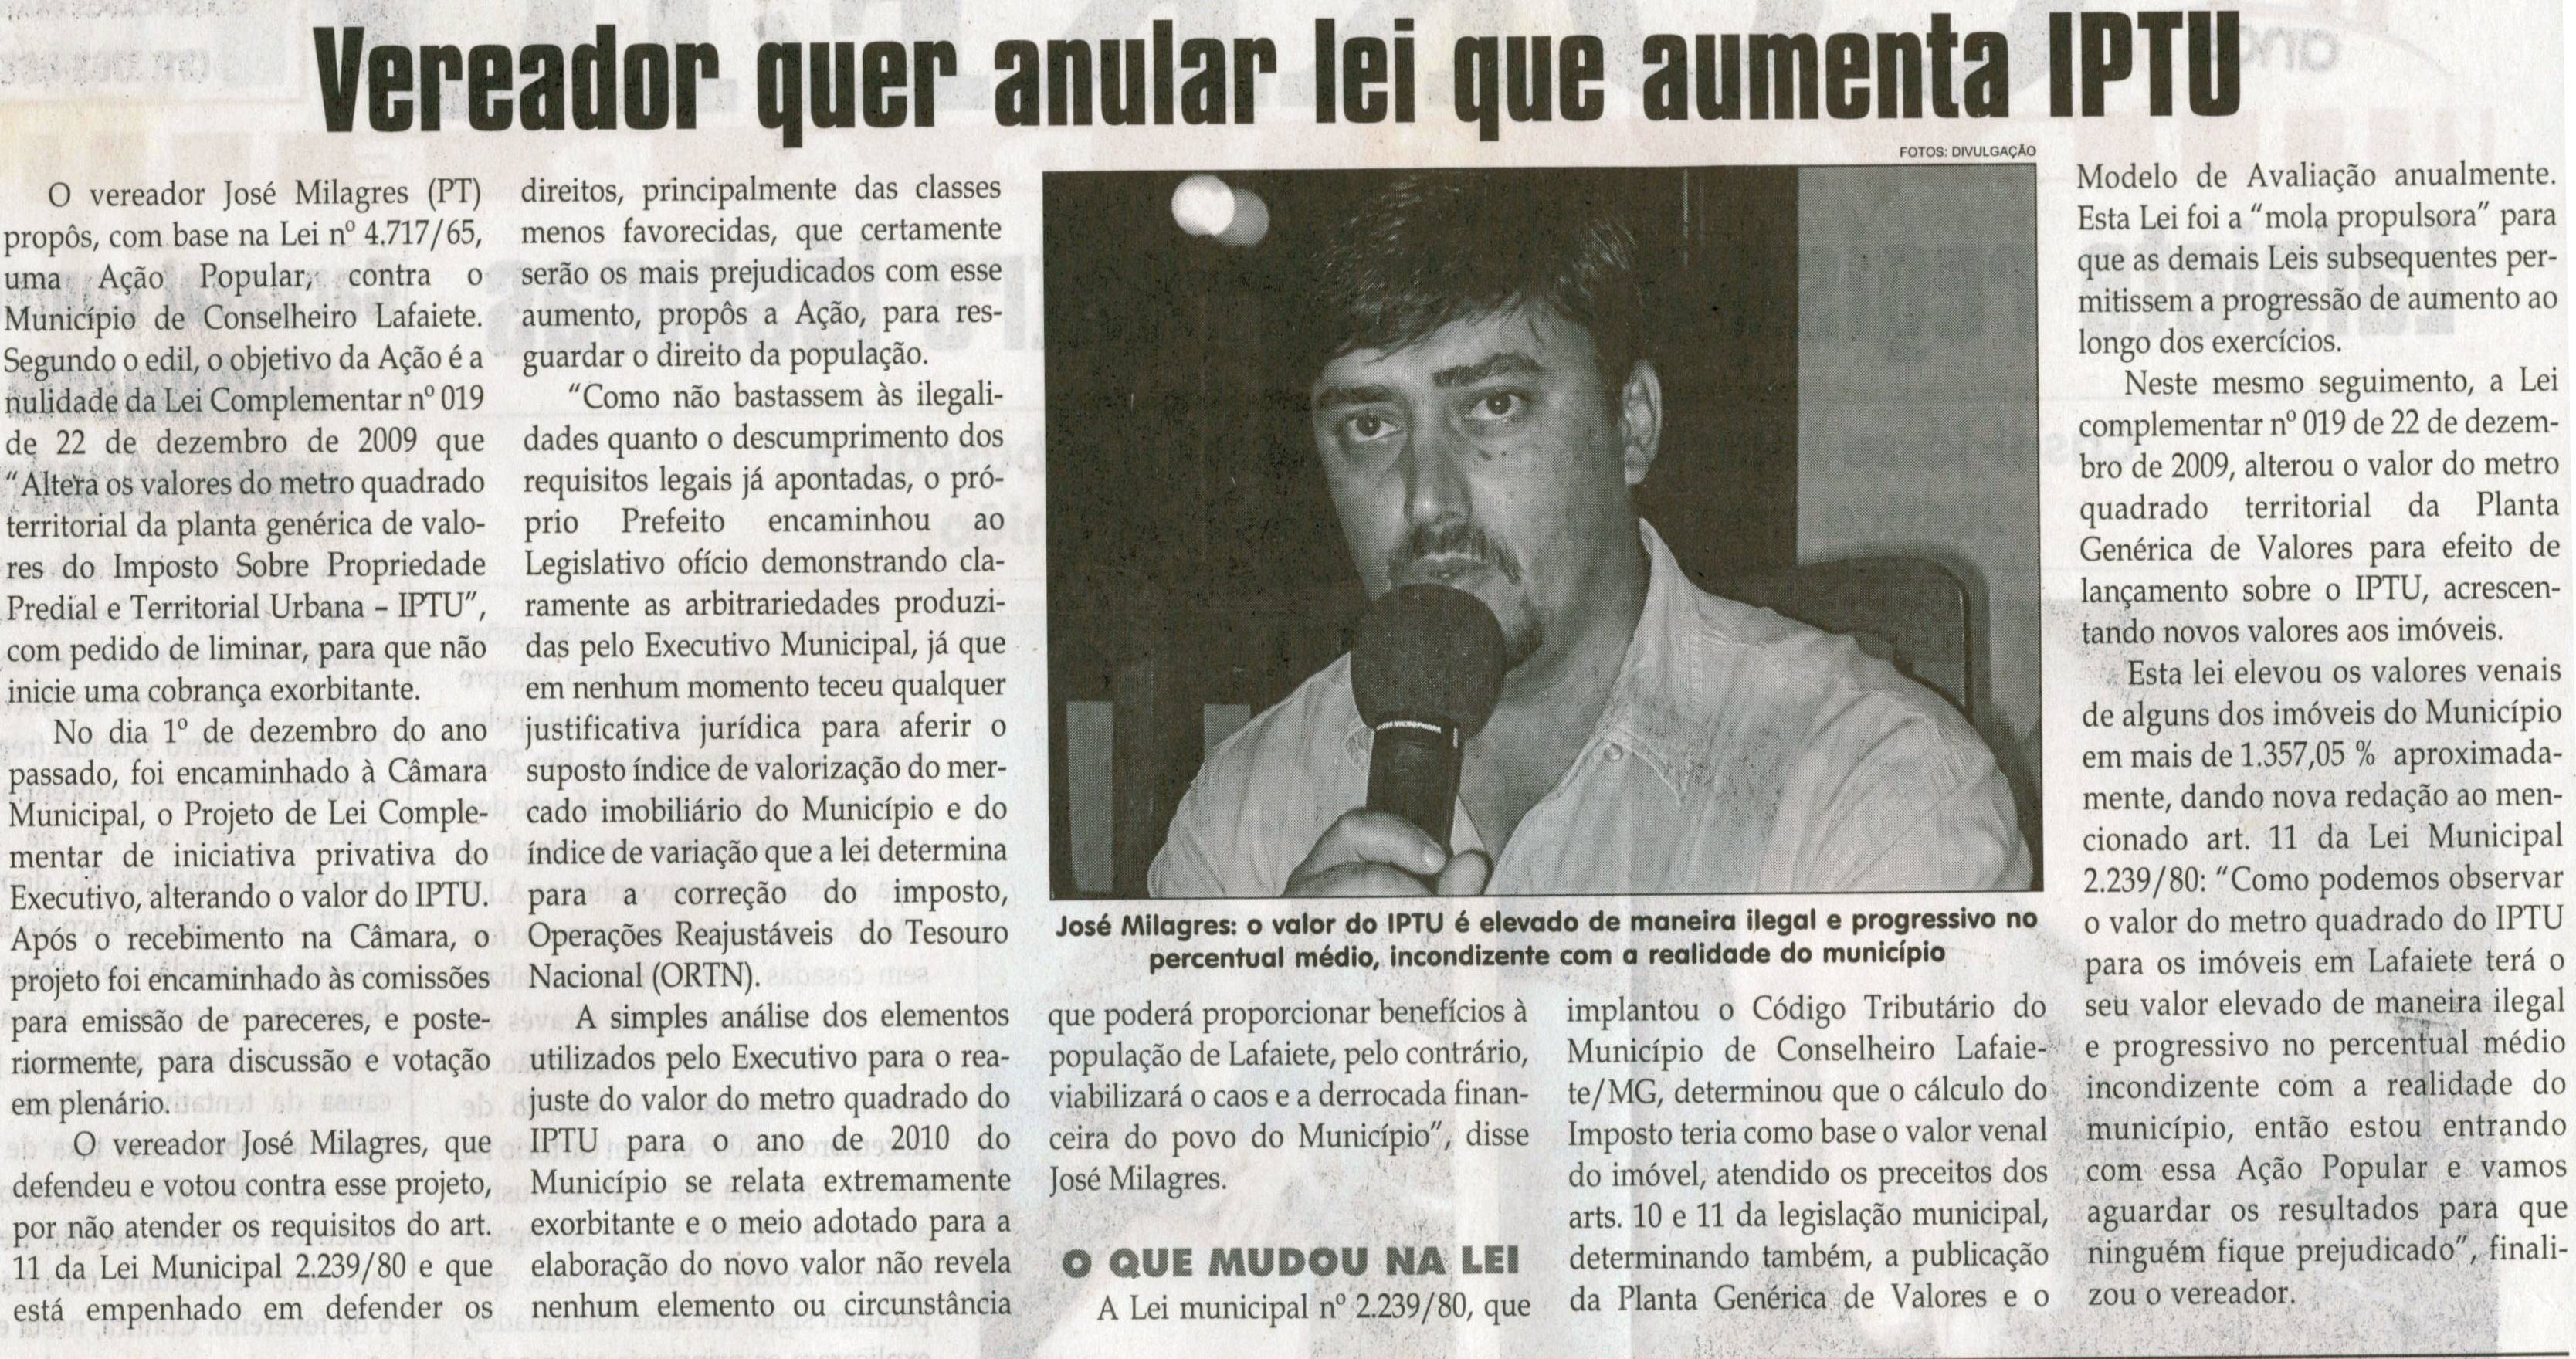 Vereador quer anular lei que aumenta IPTU. Jornal Correio da Cidade, Conselheiro lafaiete, 30 jan. 2010, p. 02.